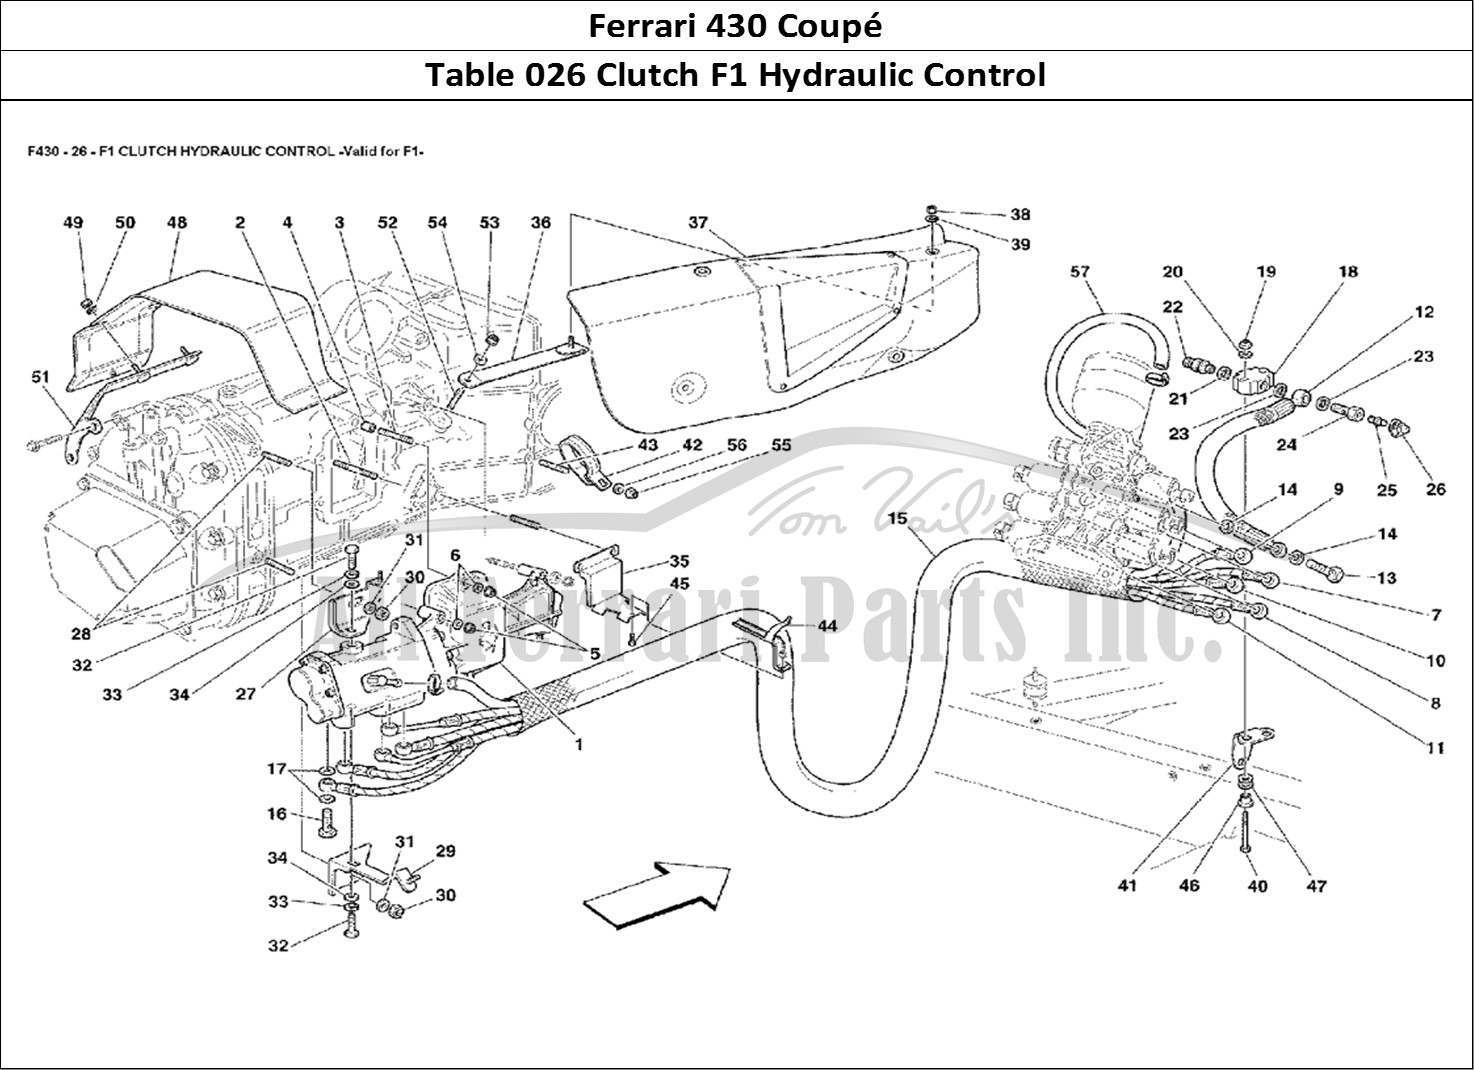 Ferrari Parts Ferrari 430 Coup Page 026 F1 Clutch Hydraulic Contr